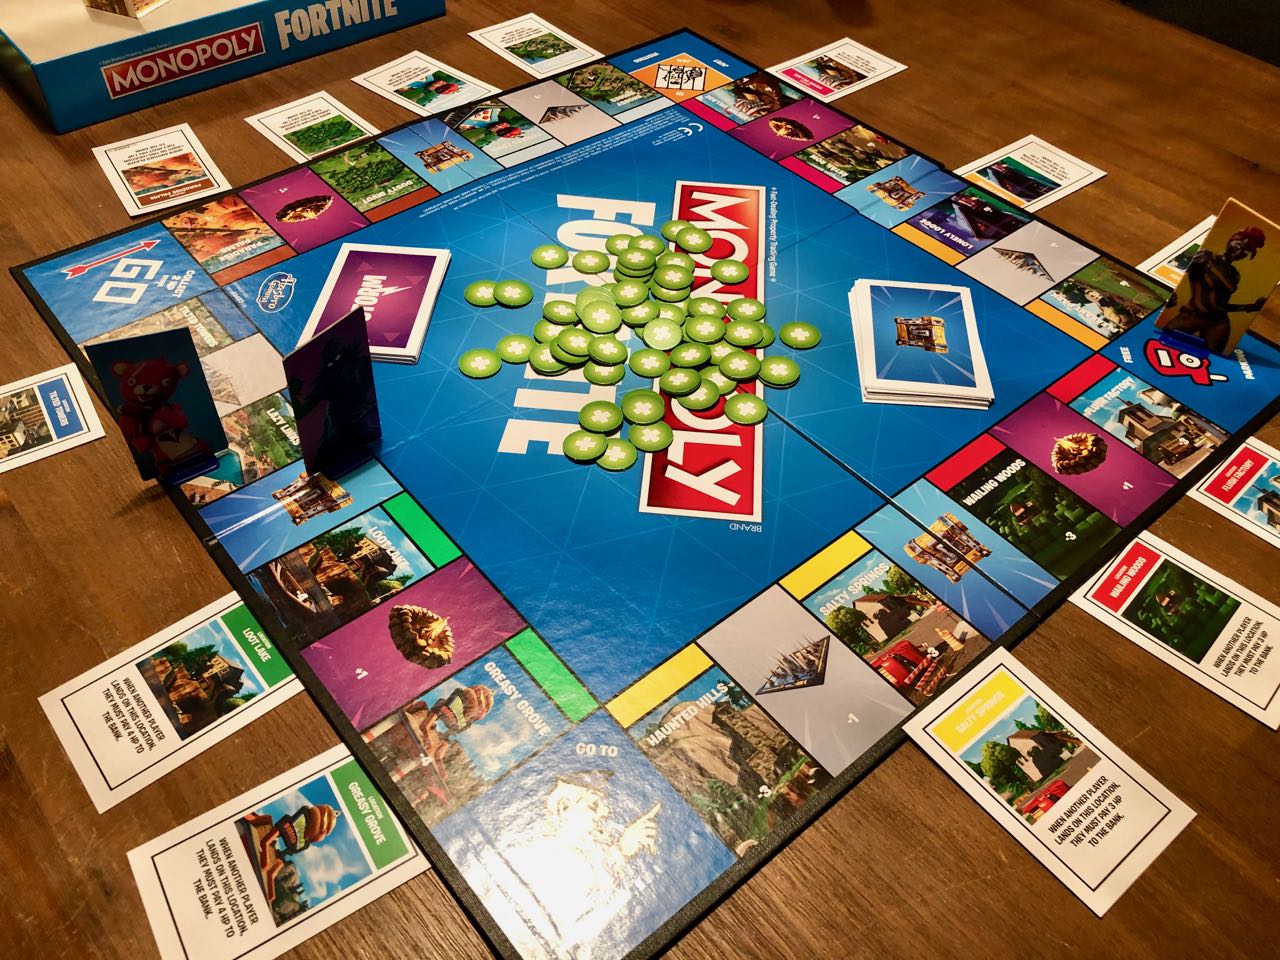 Monopoly Fortnite - hét bordspel voor pubers!